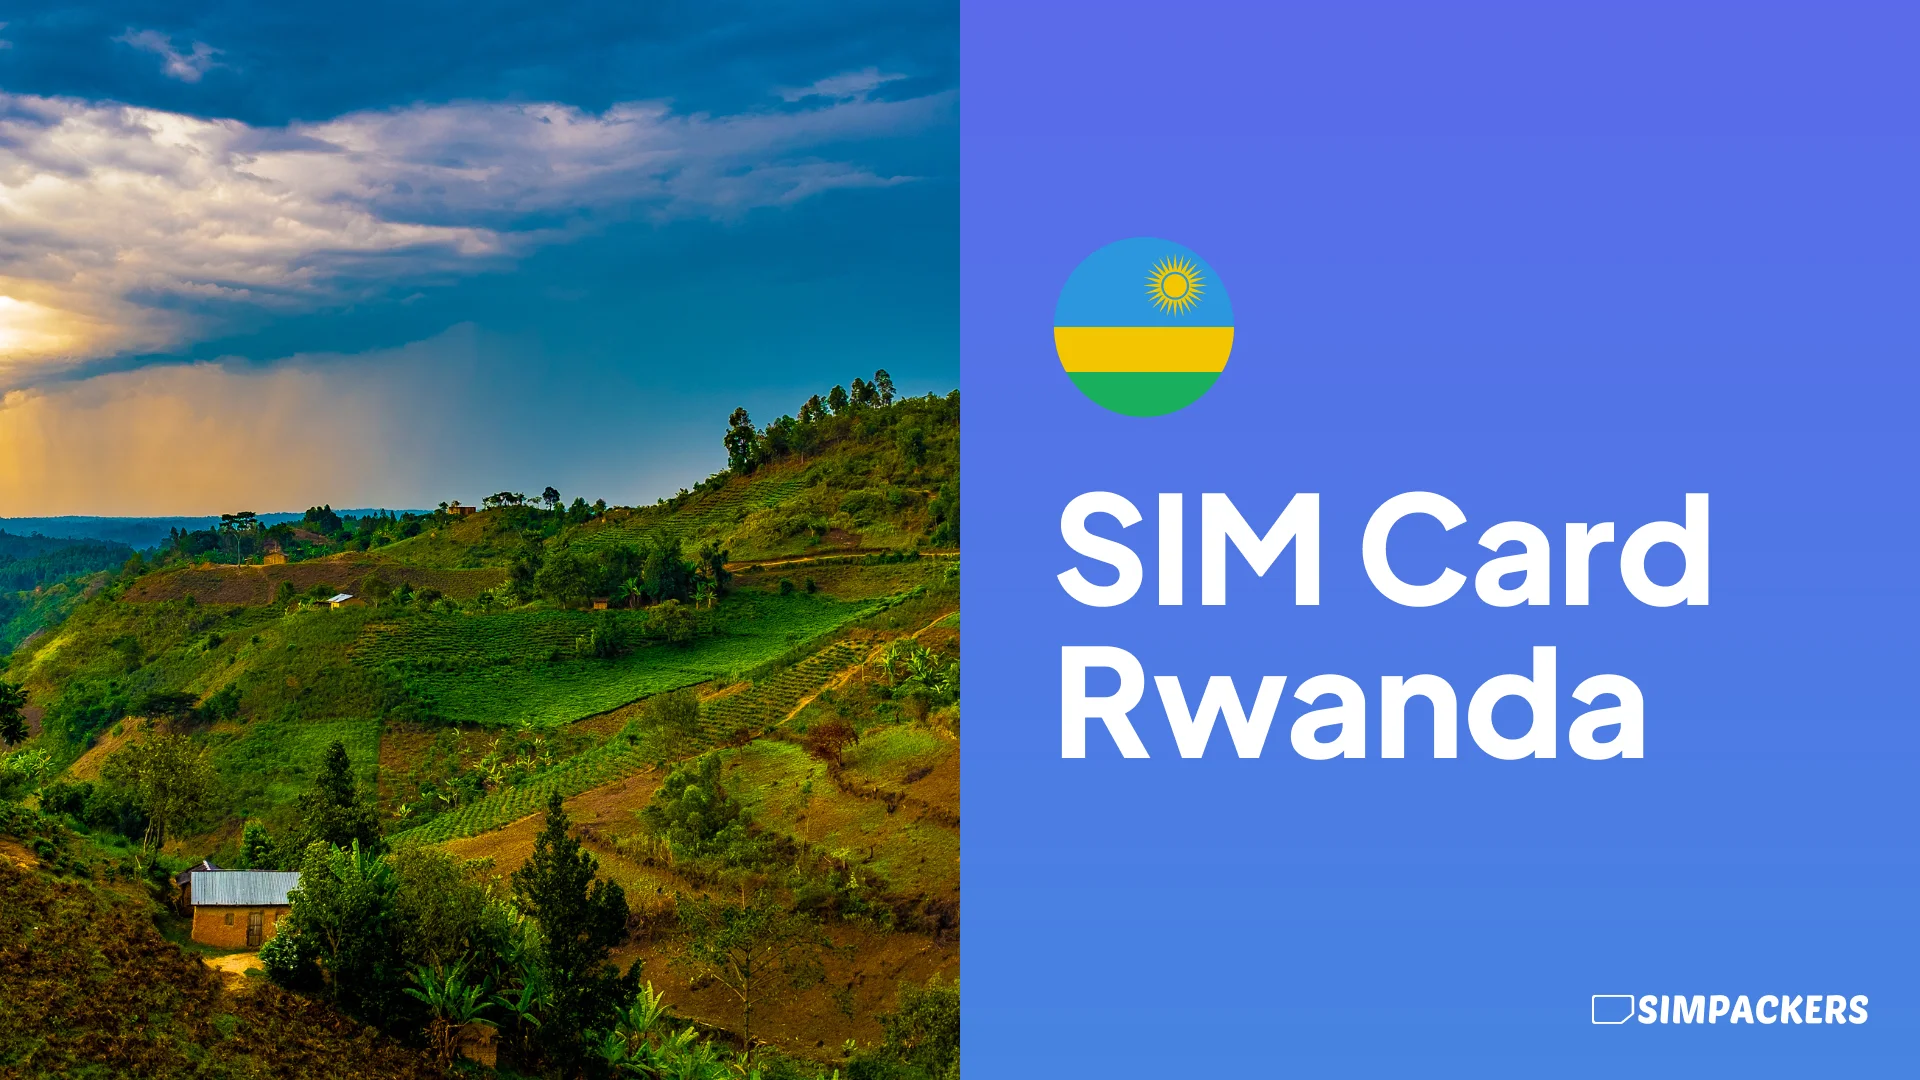 EN/FEATURED_IMAGES/sim-card-rwanda.webp